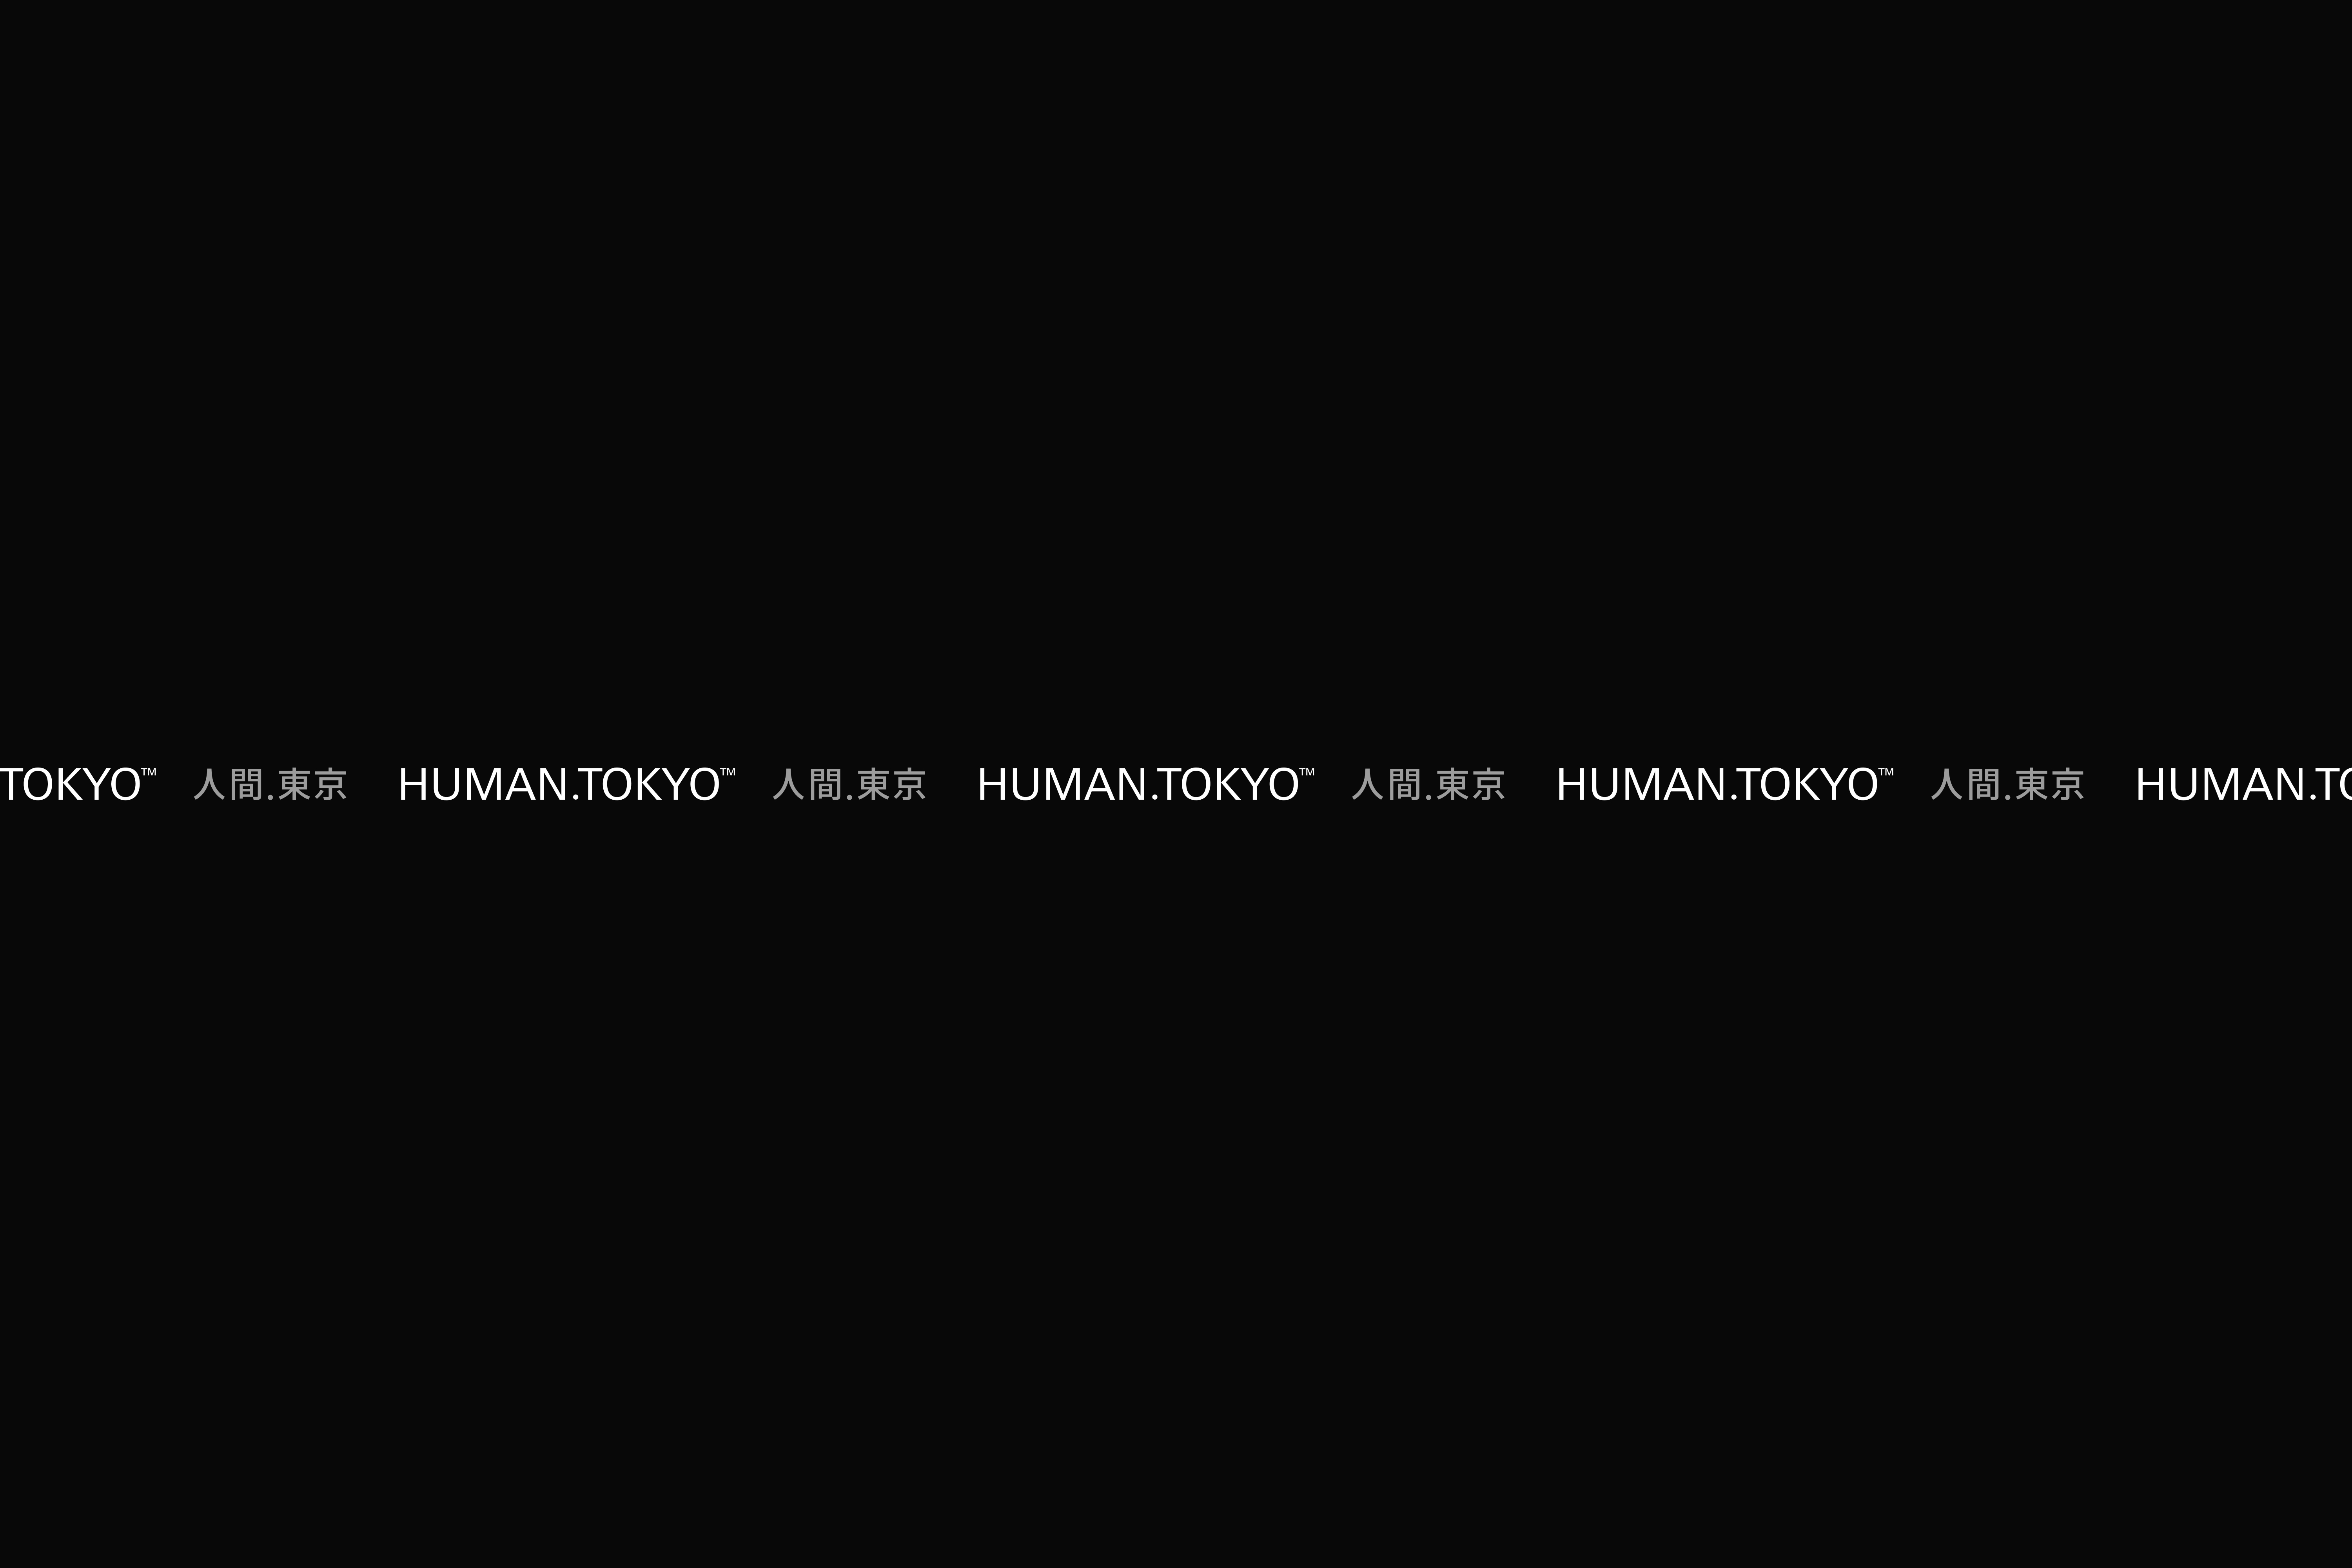 Human Tokyo 8